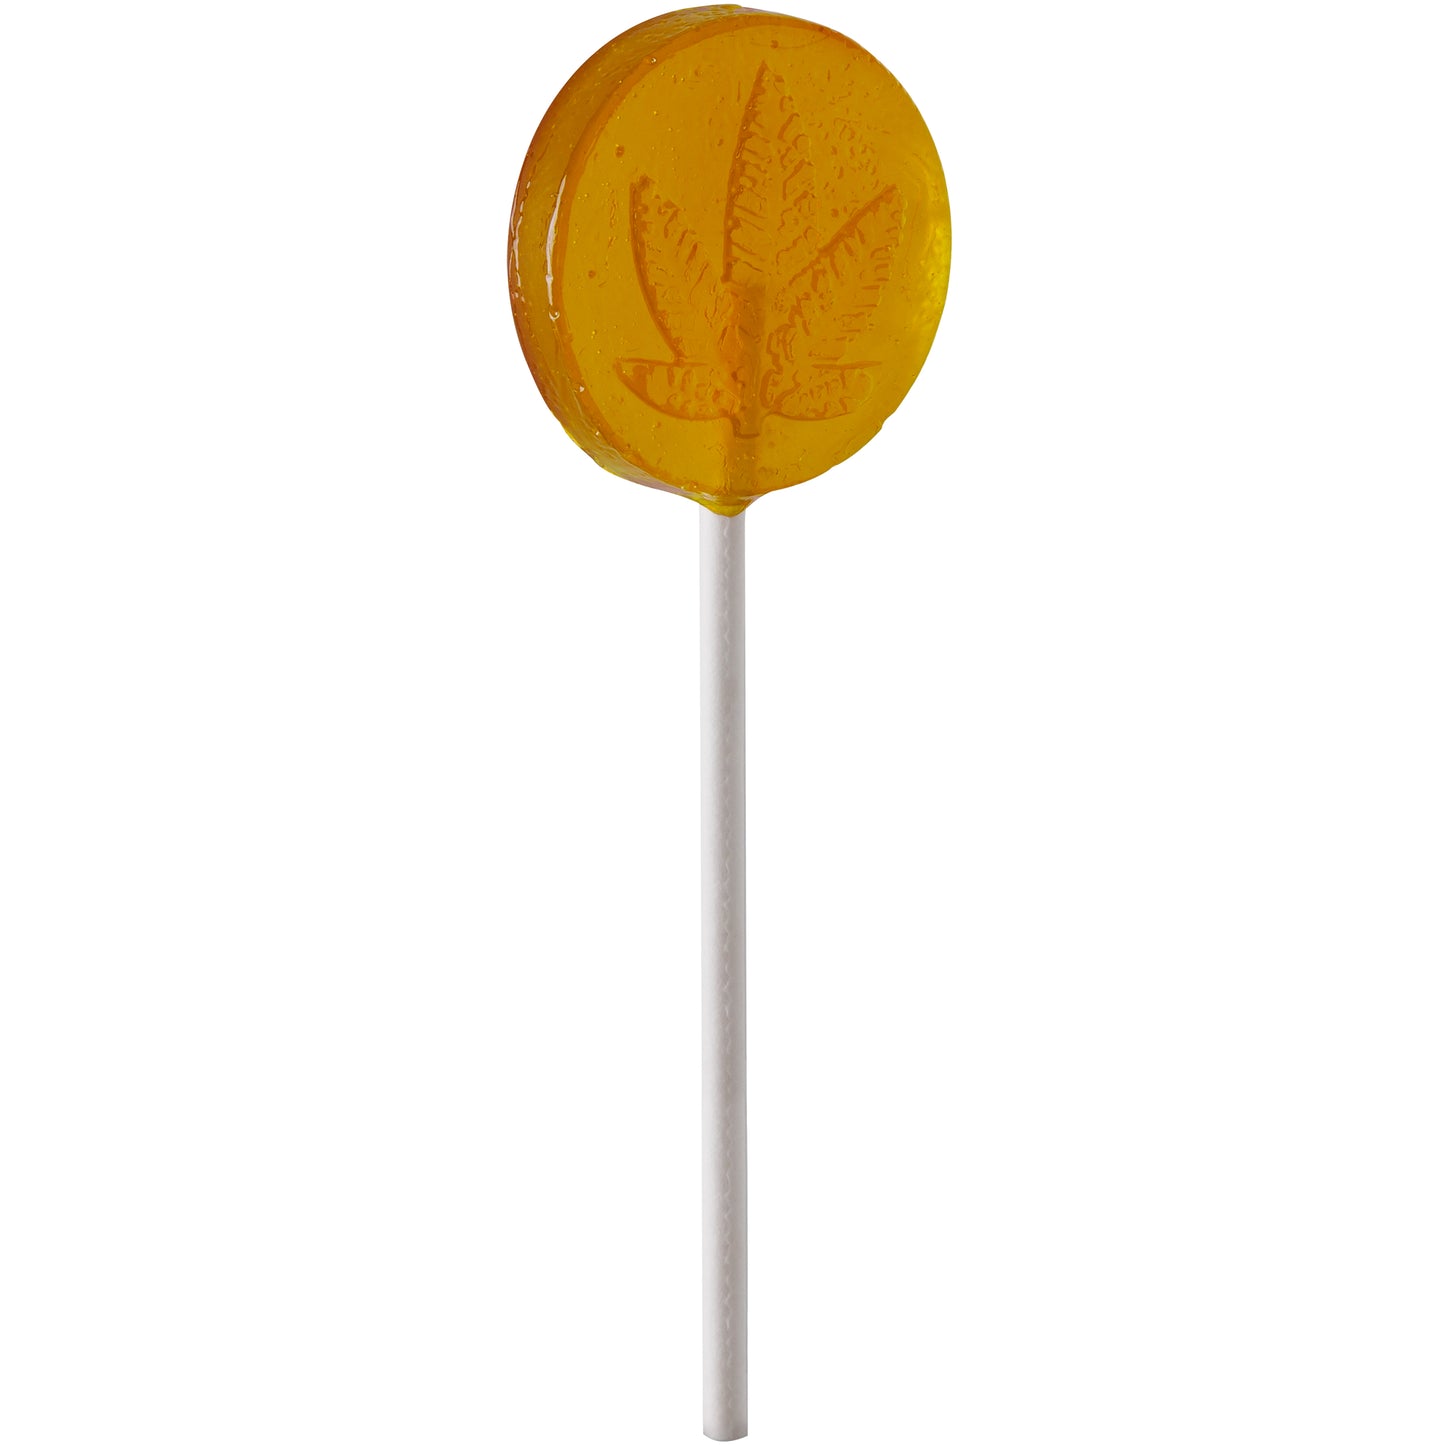 Delta 9 10mg Lollipop